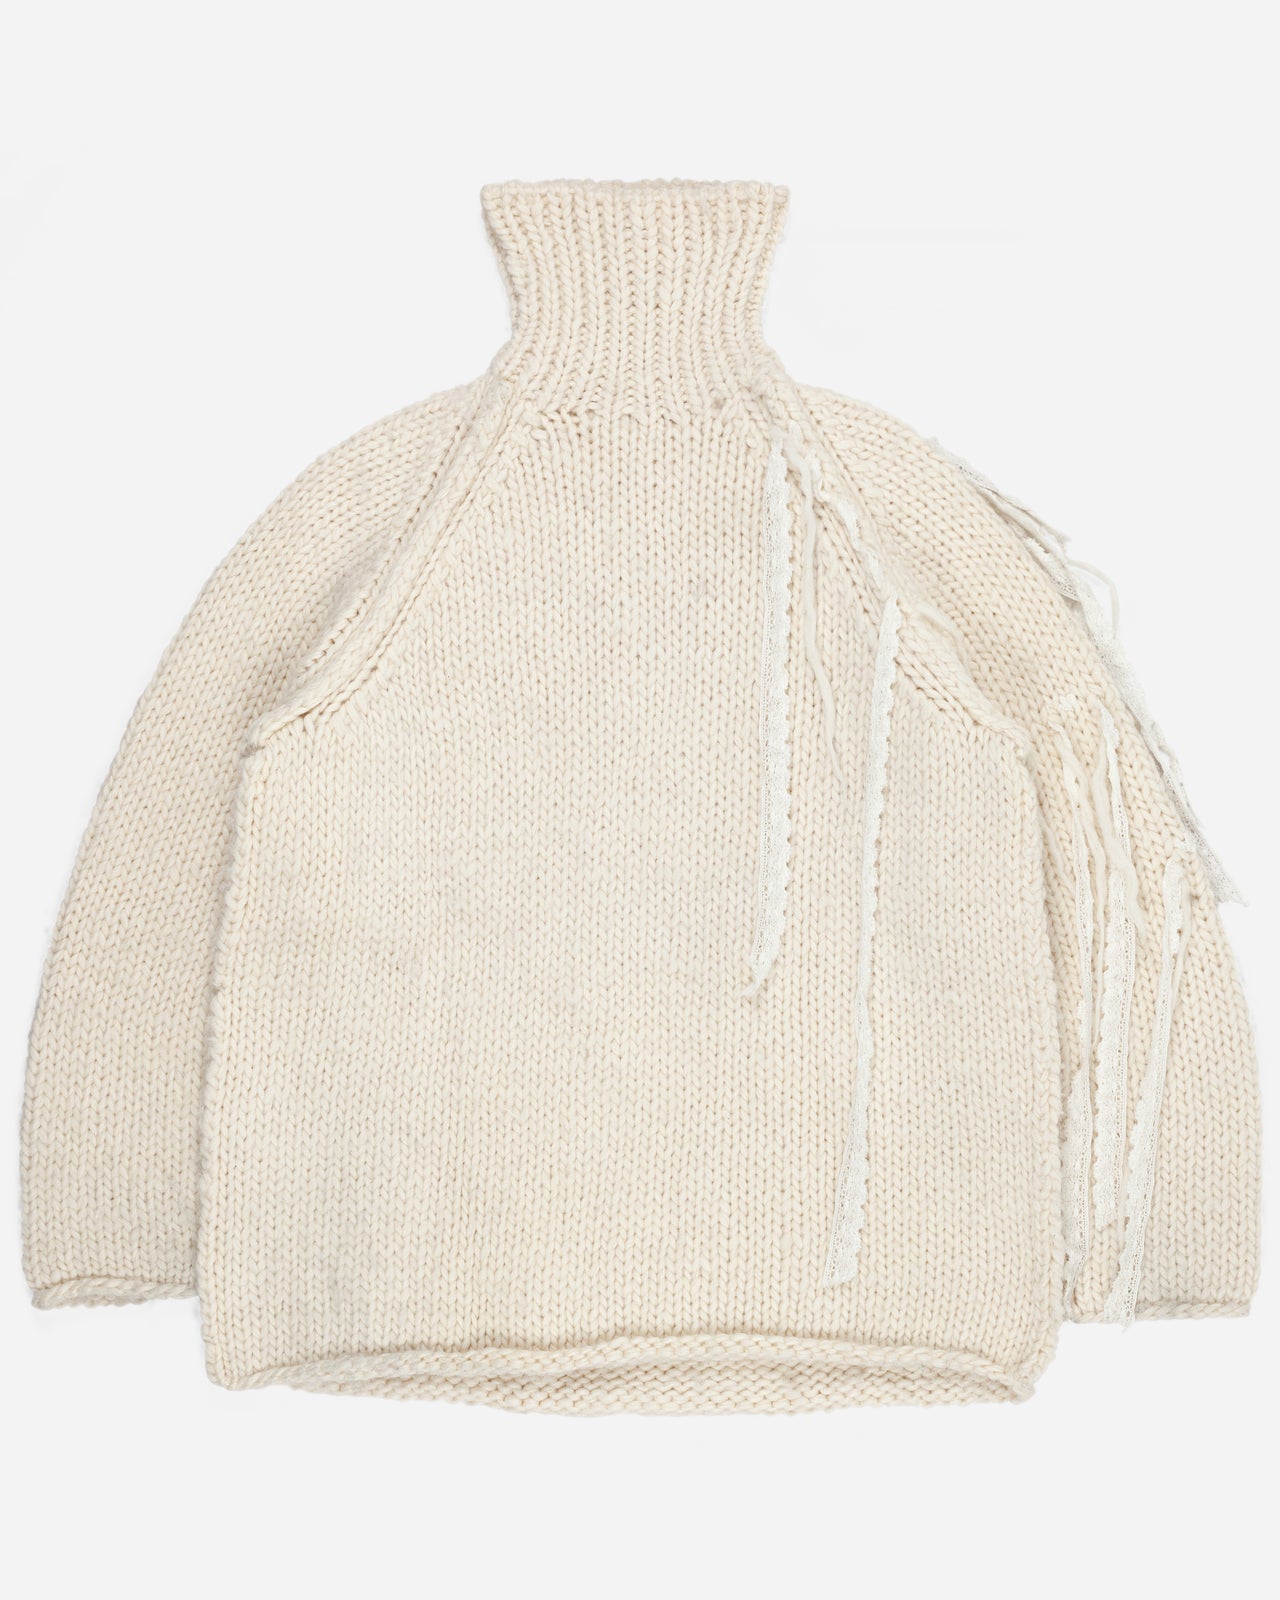 Yohji Yamamoto Pour Homme "Sample" Lace Turtleneck Sweater - AW94